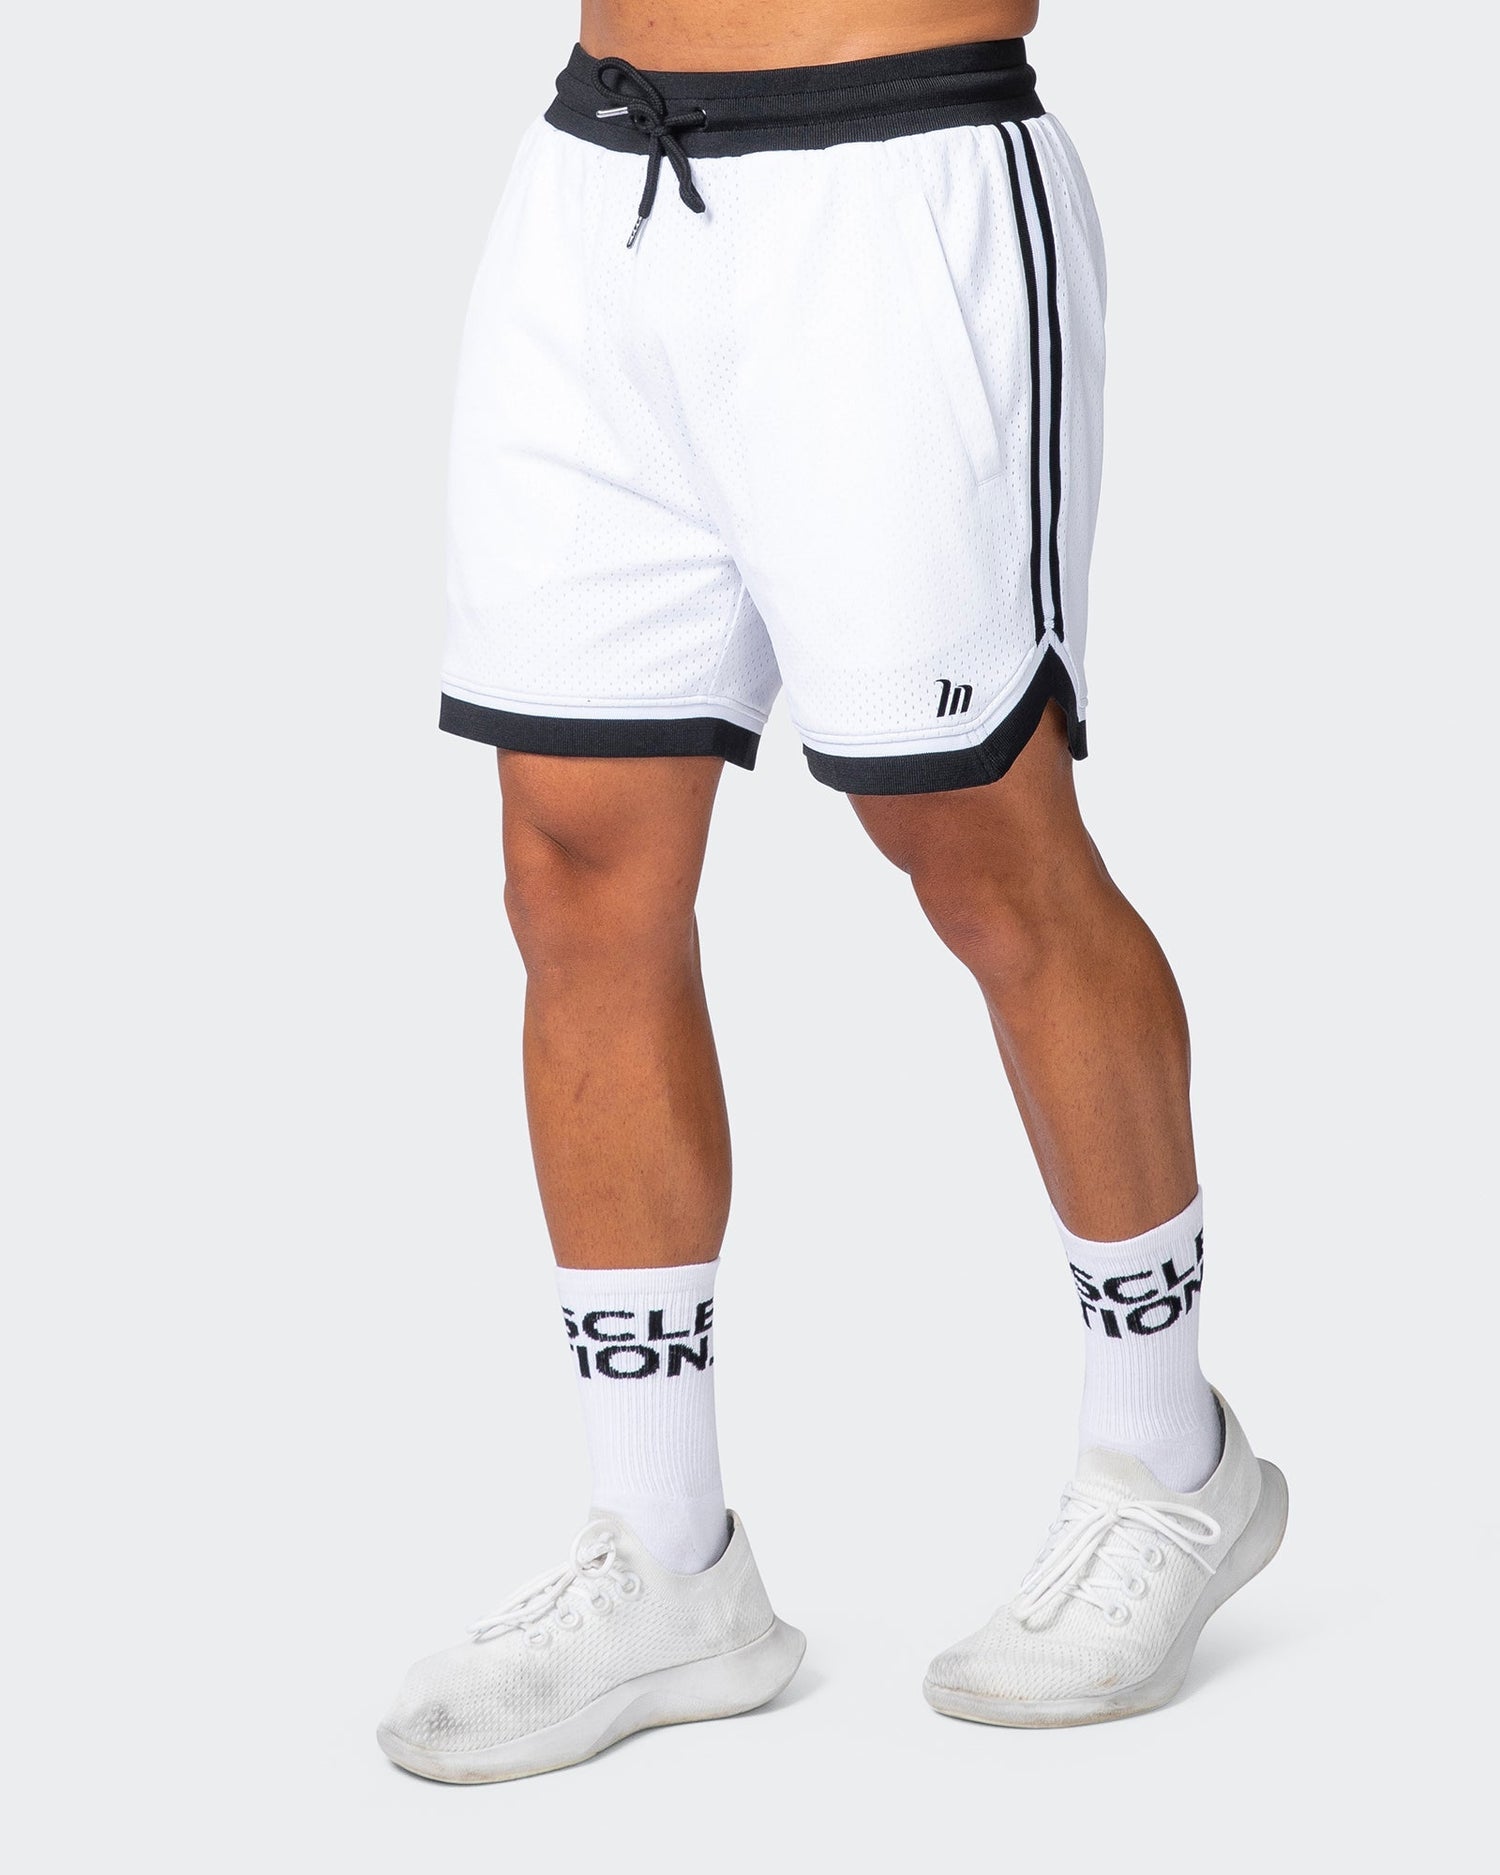 Mens 5" Basketball Shorts - White